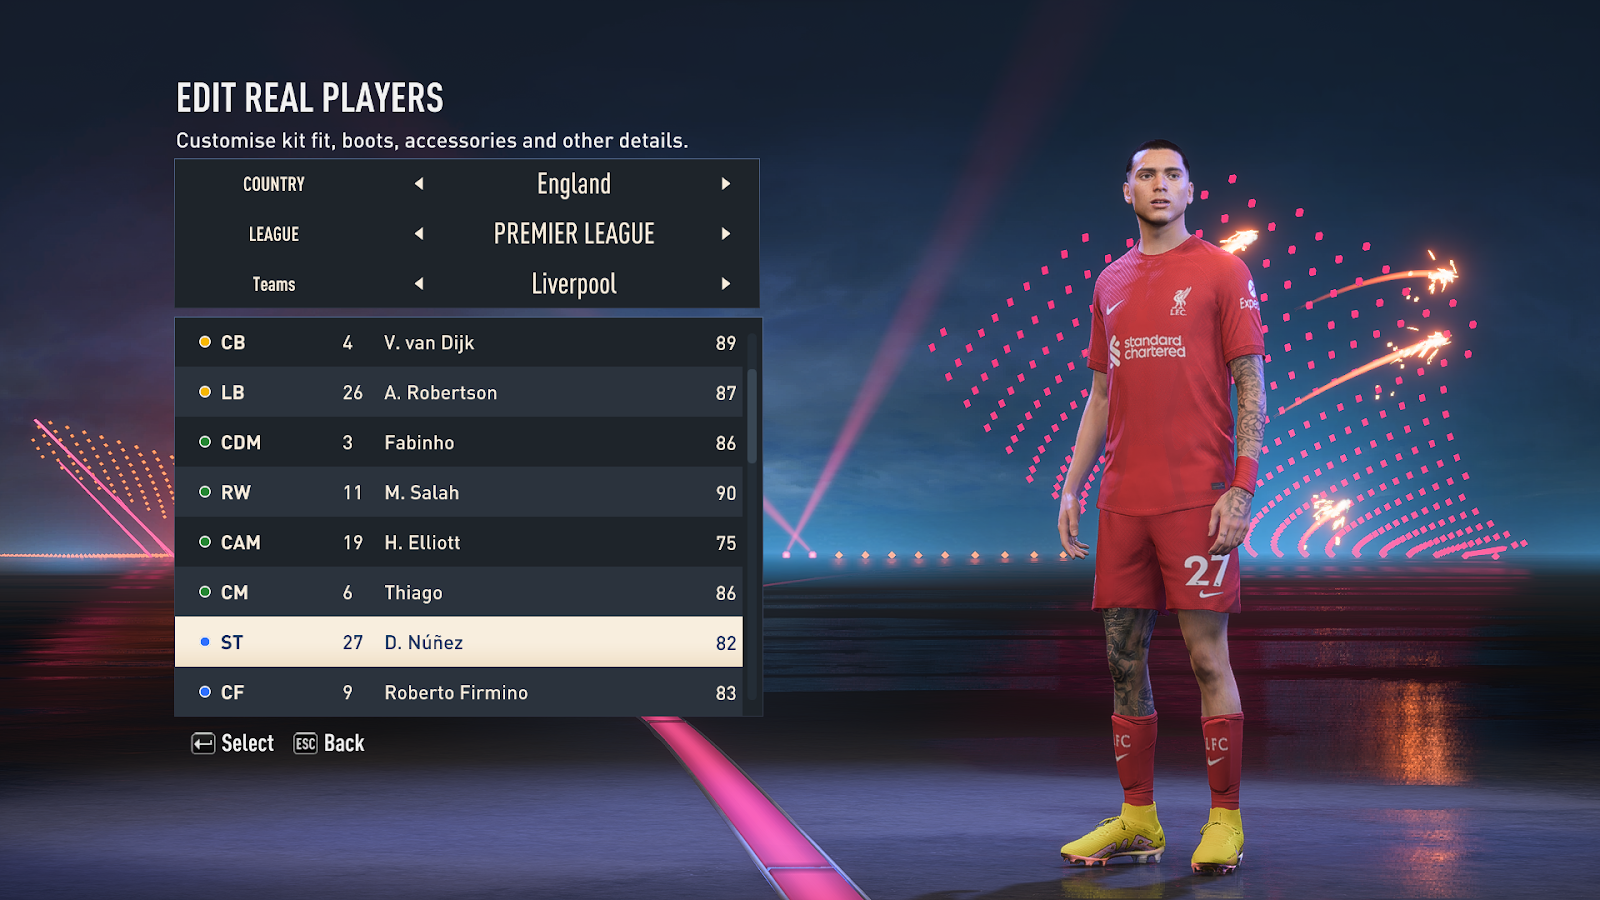 FIFA 23 Scoreboards Pack